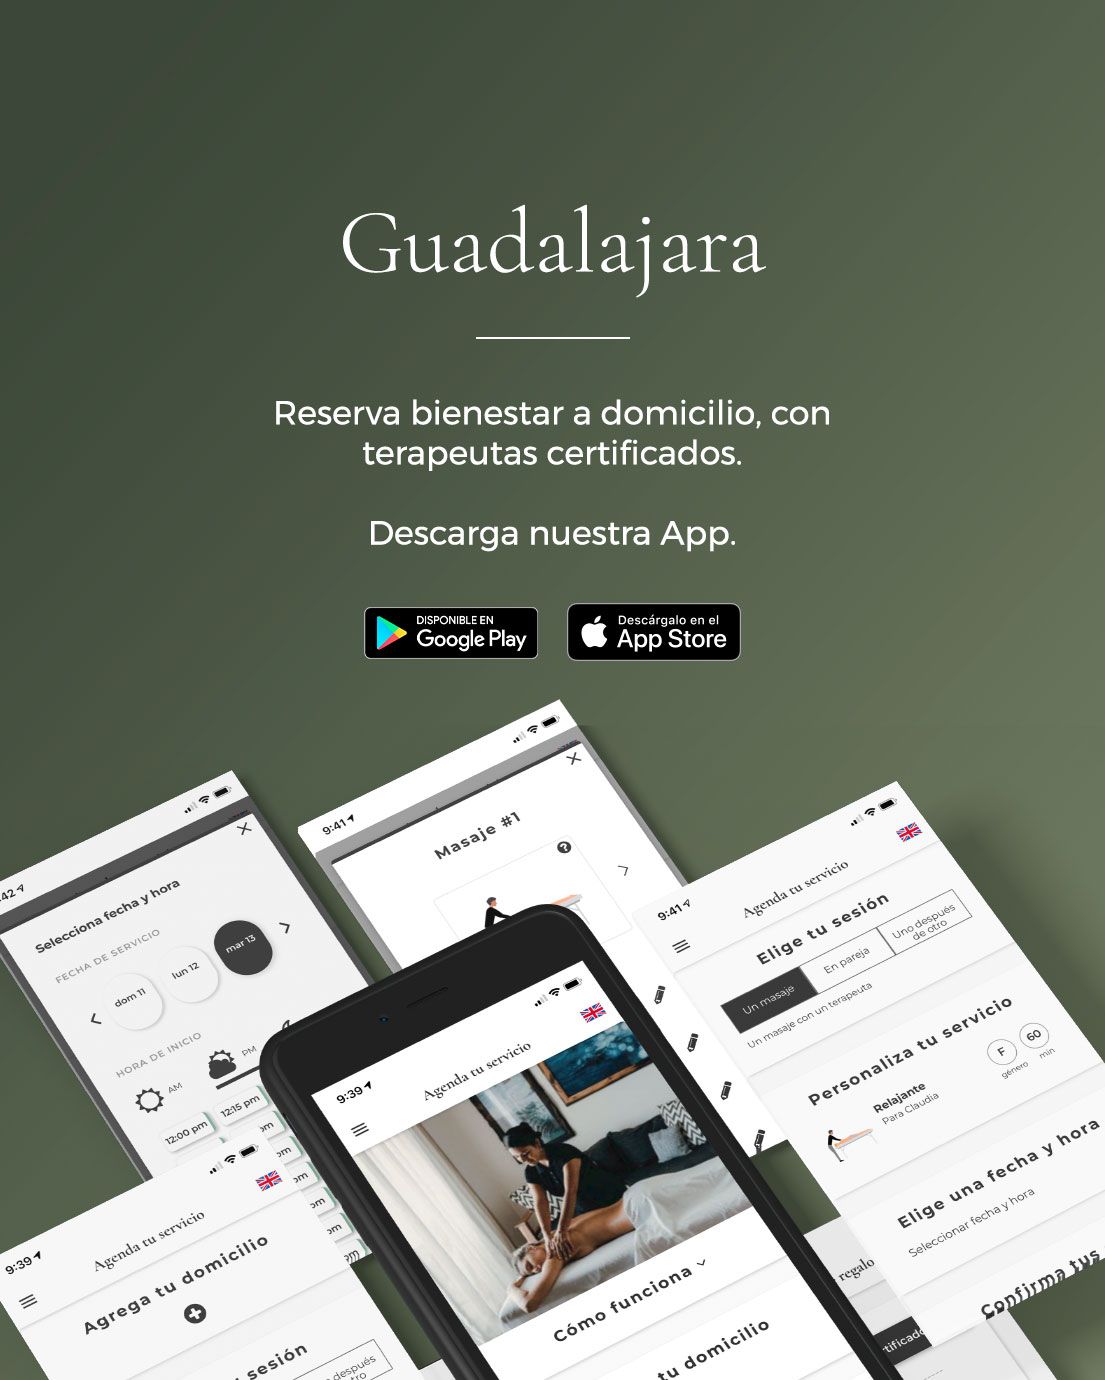 La App del bienestar a domicilio llega a Guadalajara